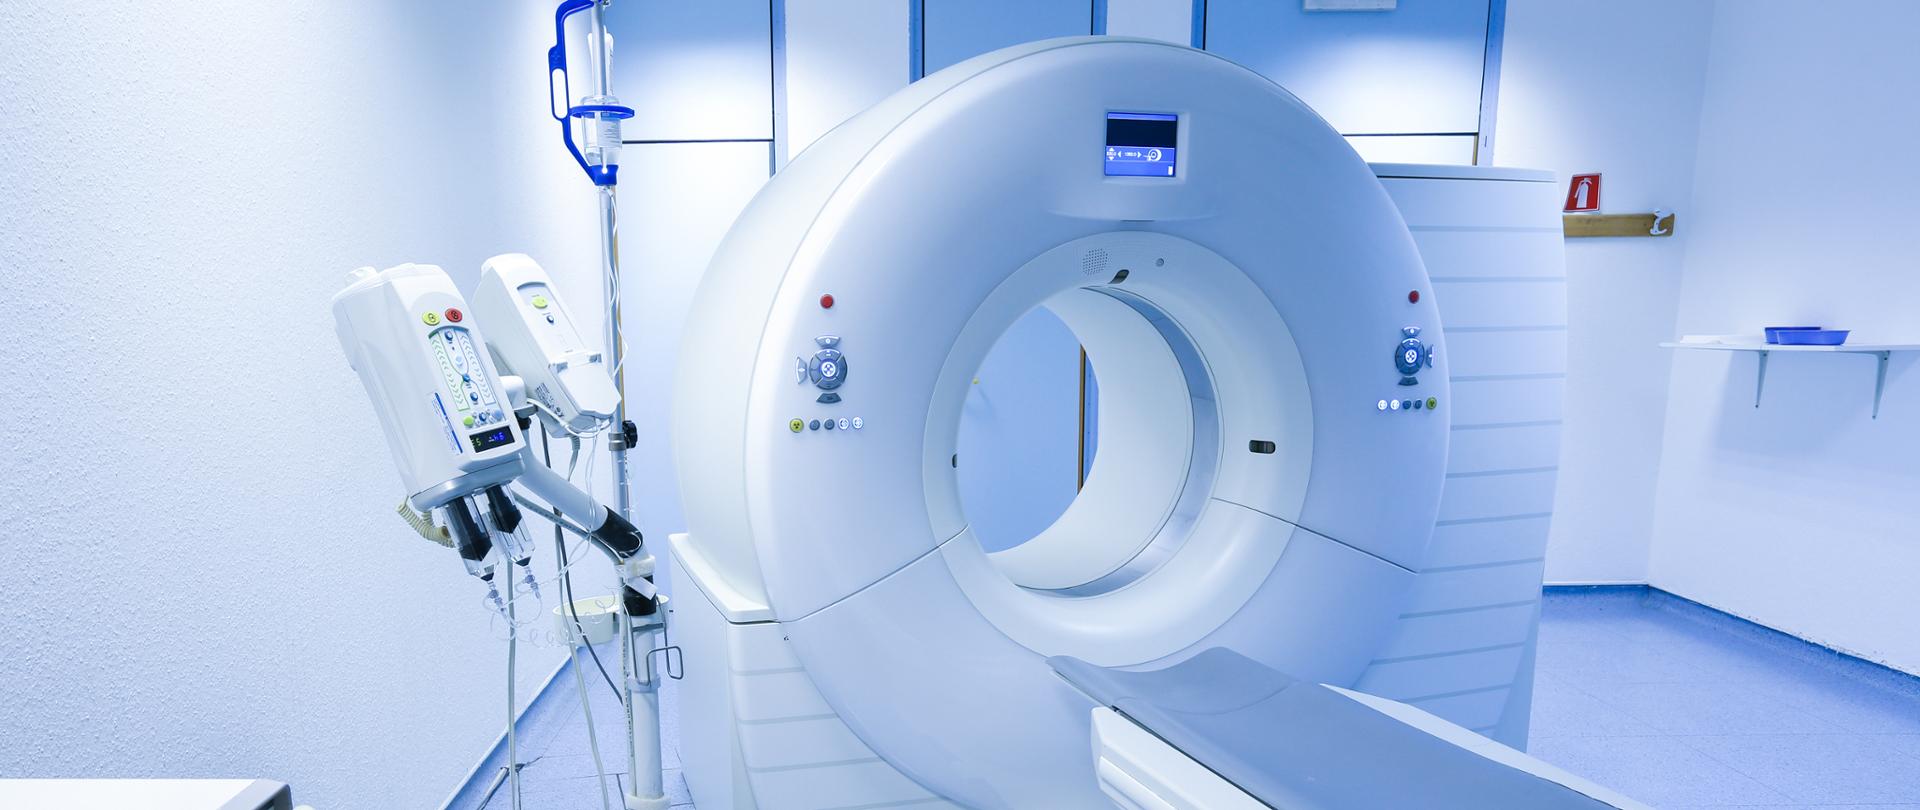 Skaner CT (tomografia komputerowa) w szpitalu